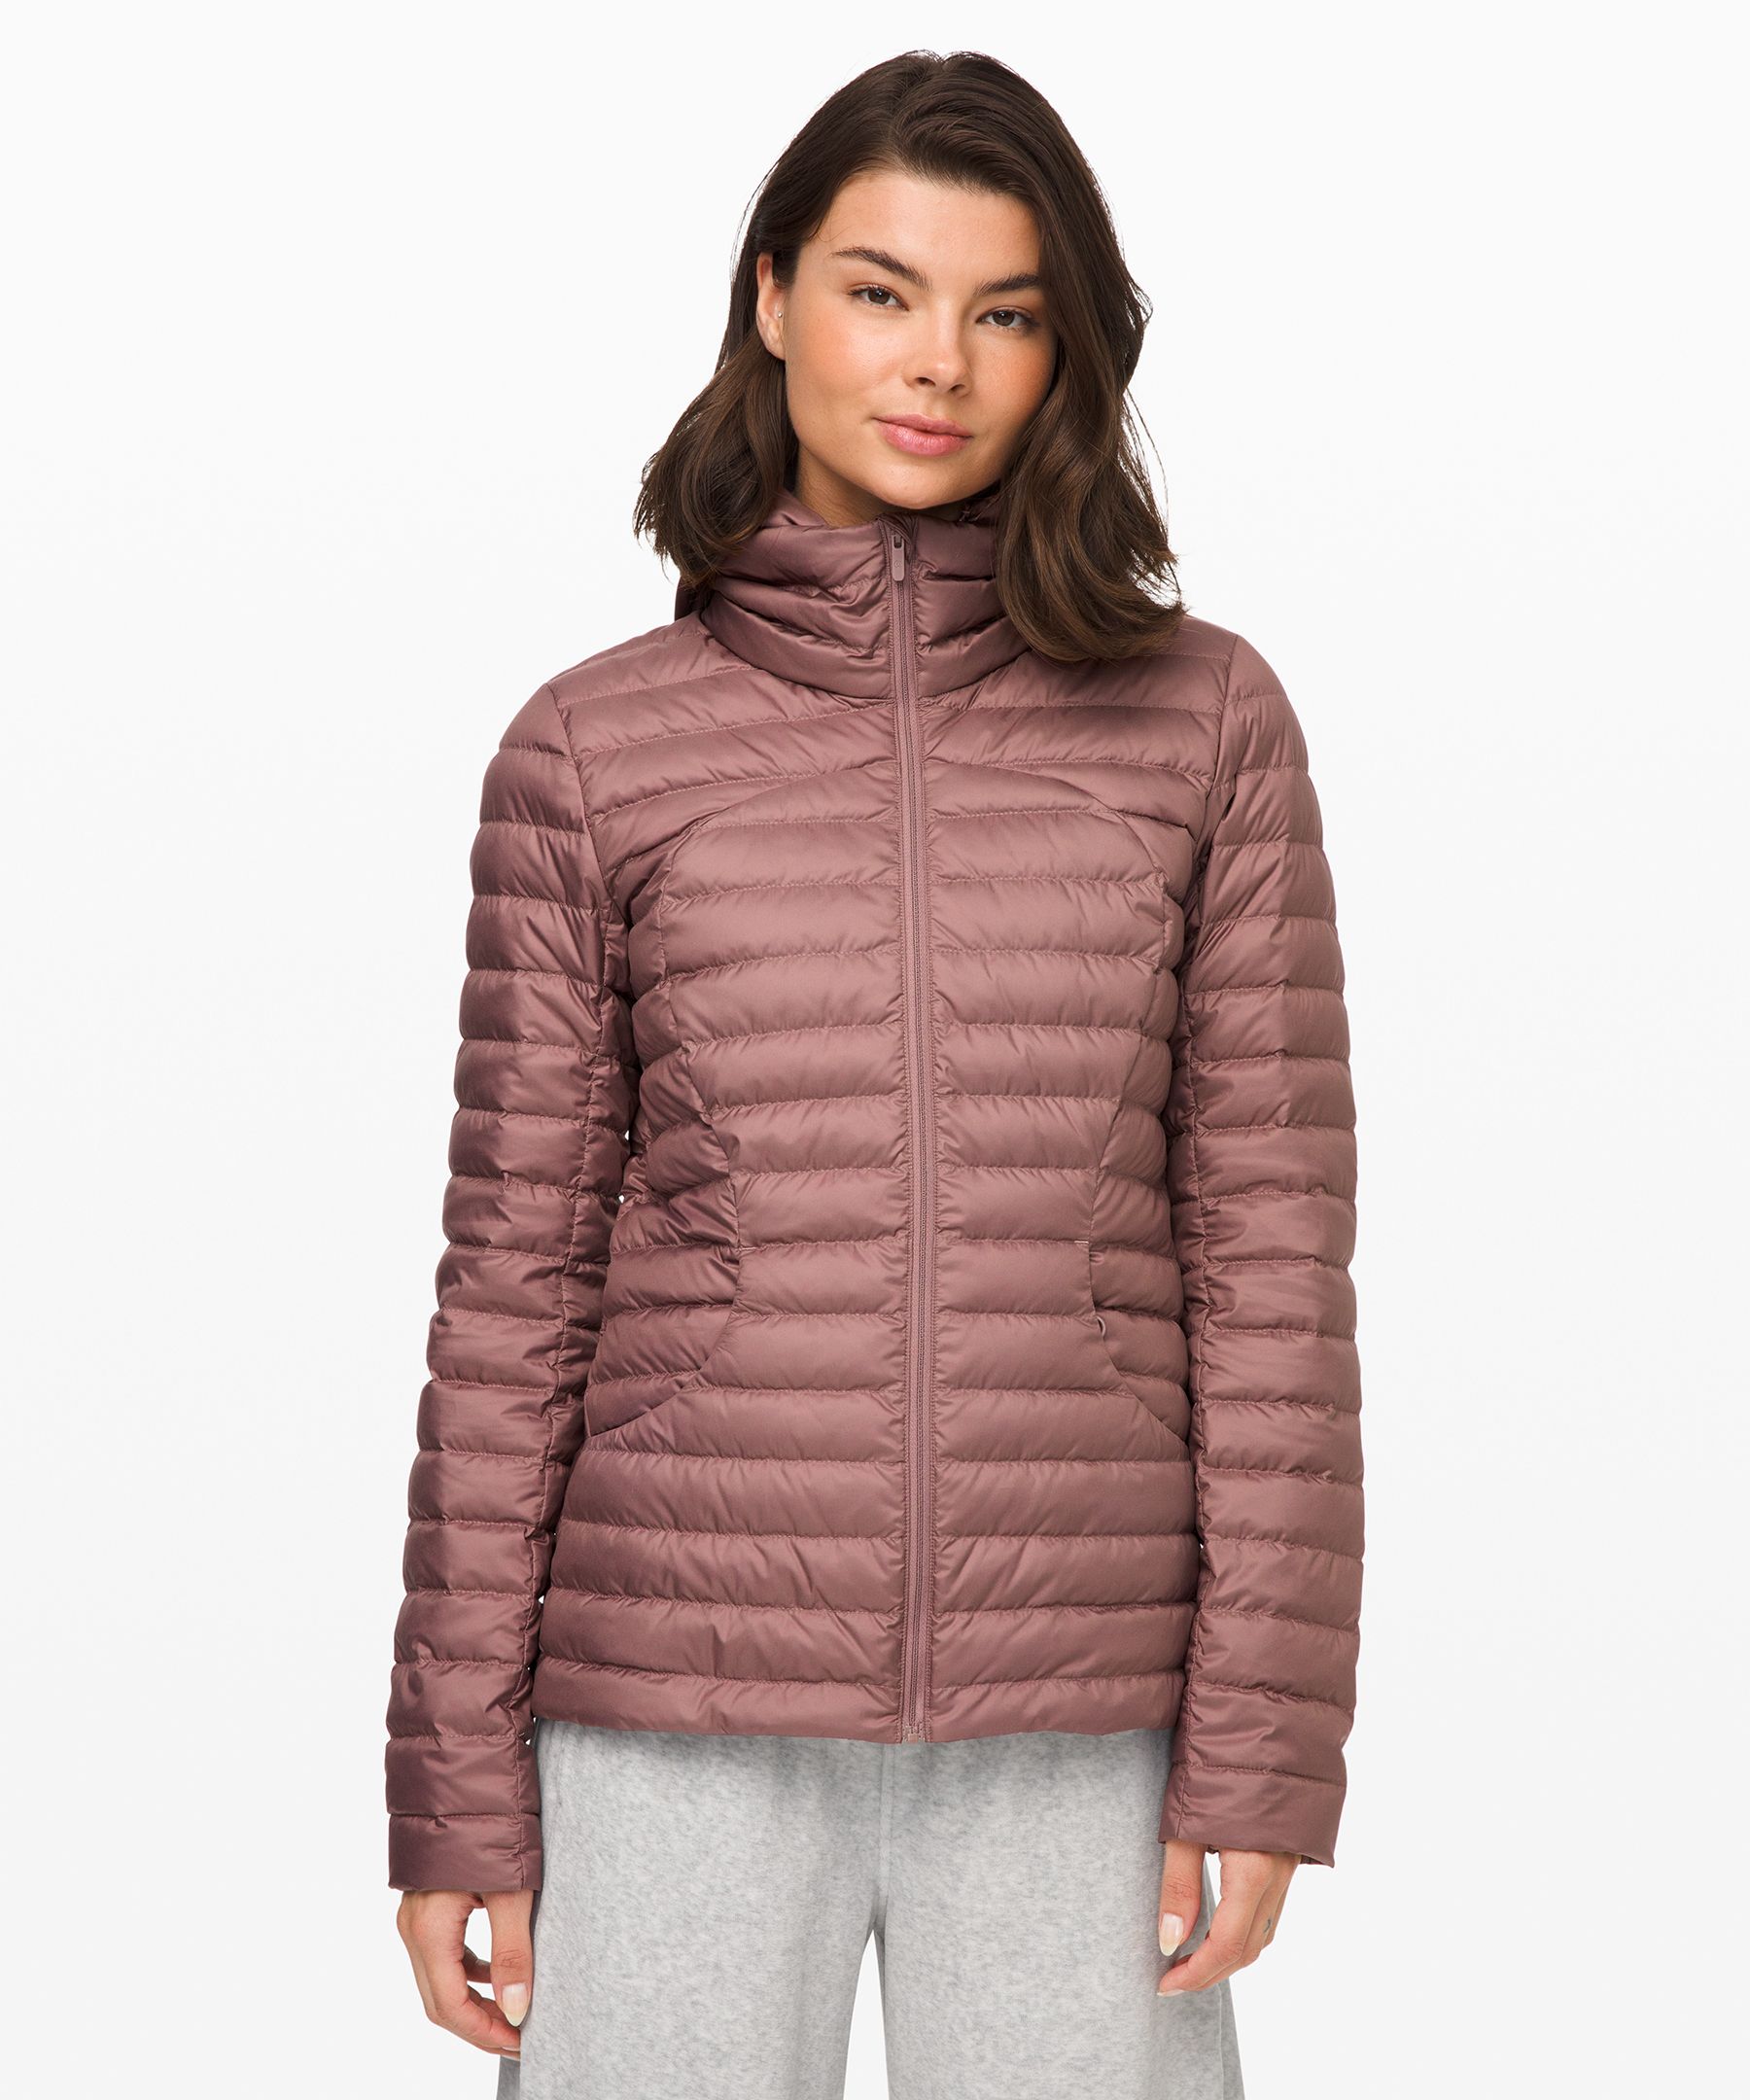 lululemon packable jacket